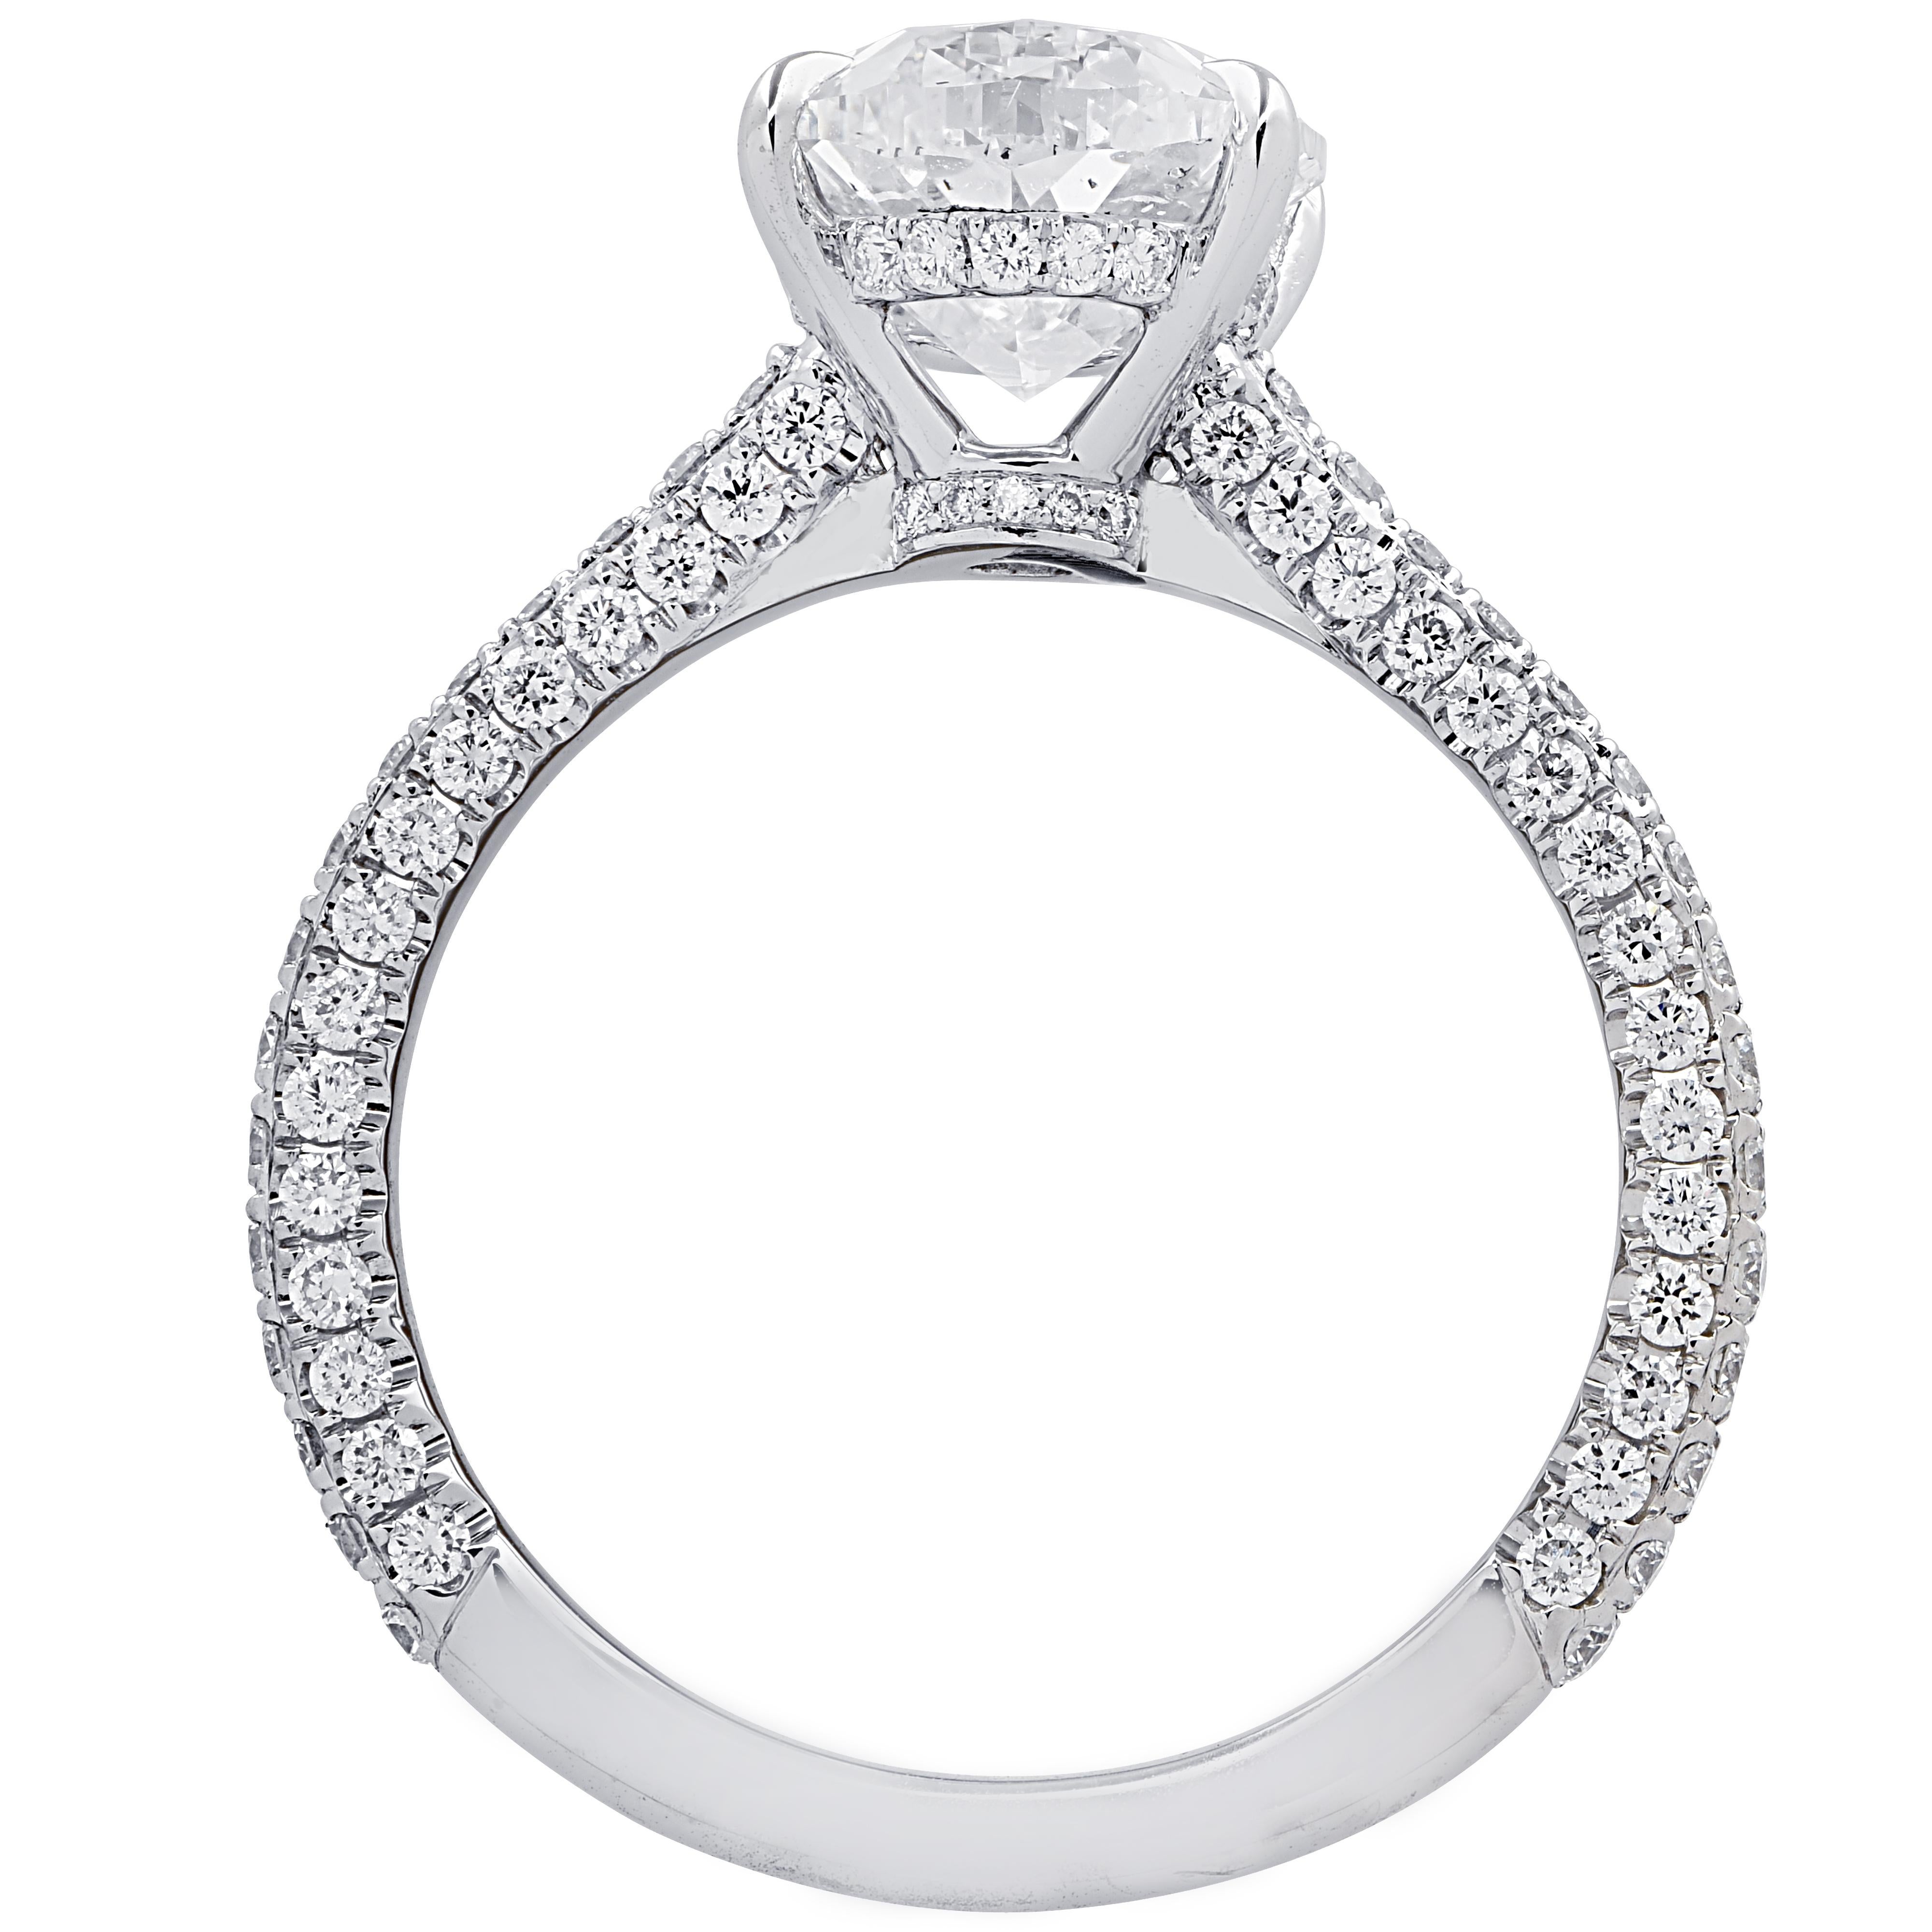 Oval Cut Vivid Diamonds GIA Certified 3.02 Carat Diamond Engagement Ring